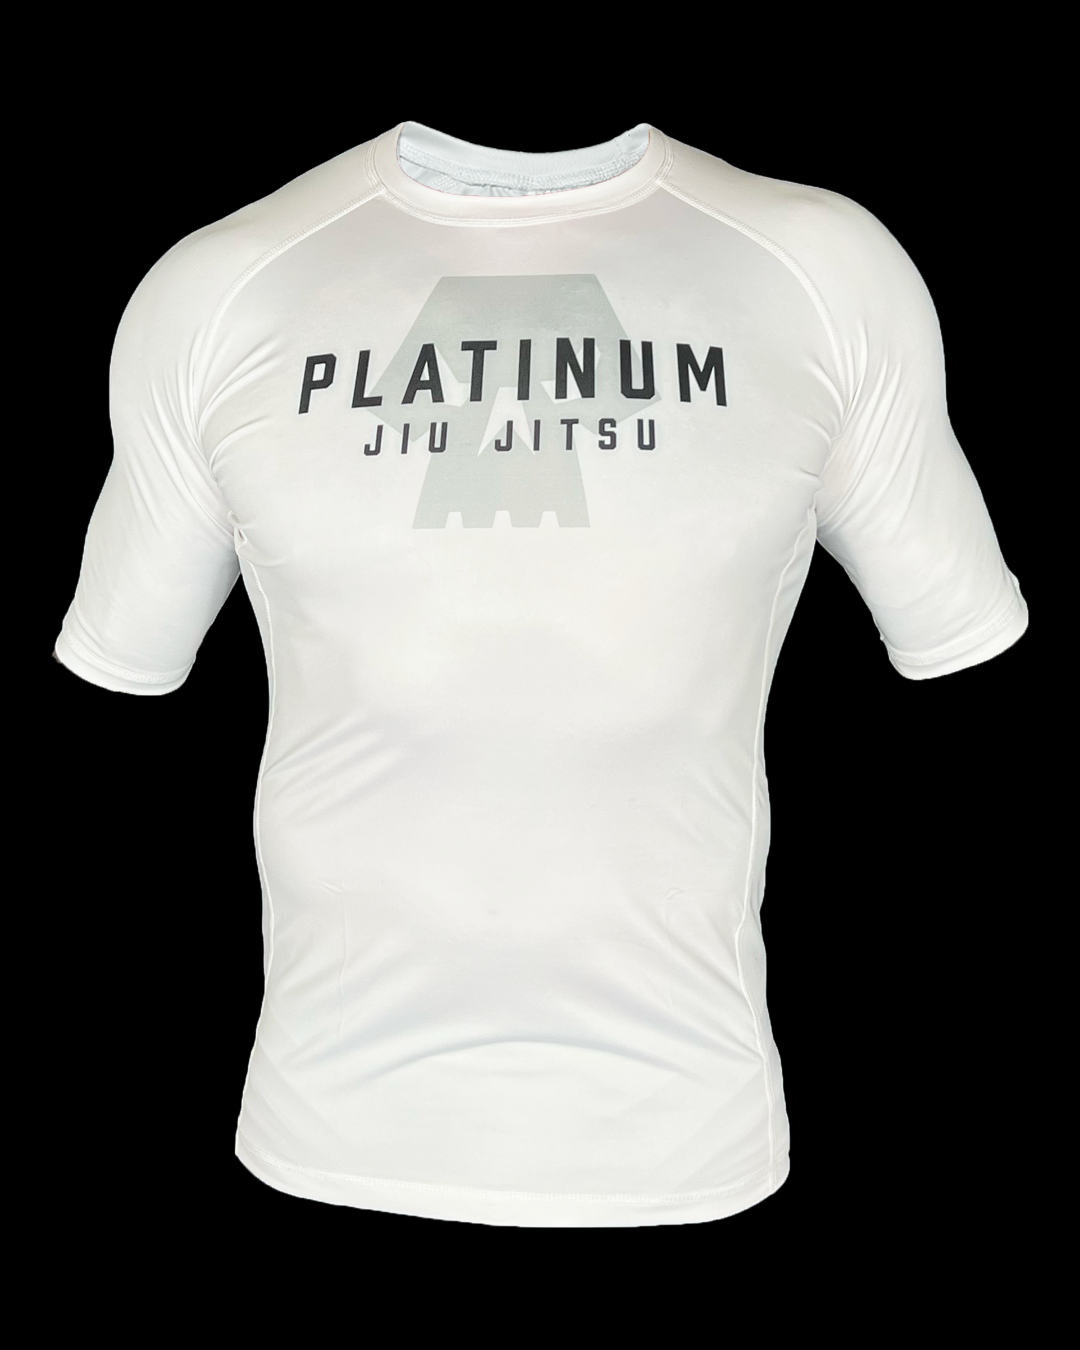 Short Sleeve Black Rashguard, MMA, BJJ – Platinum Jiu Jitsu